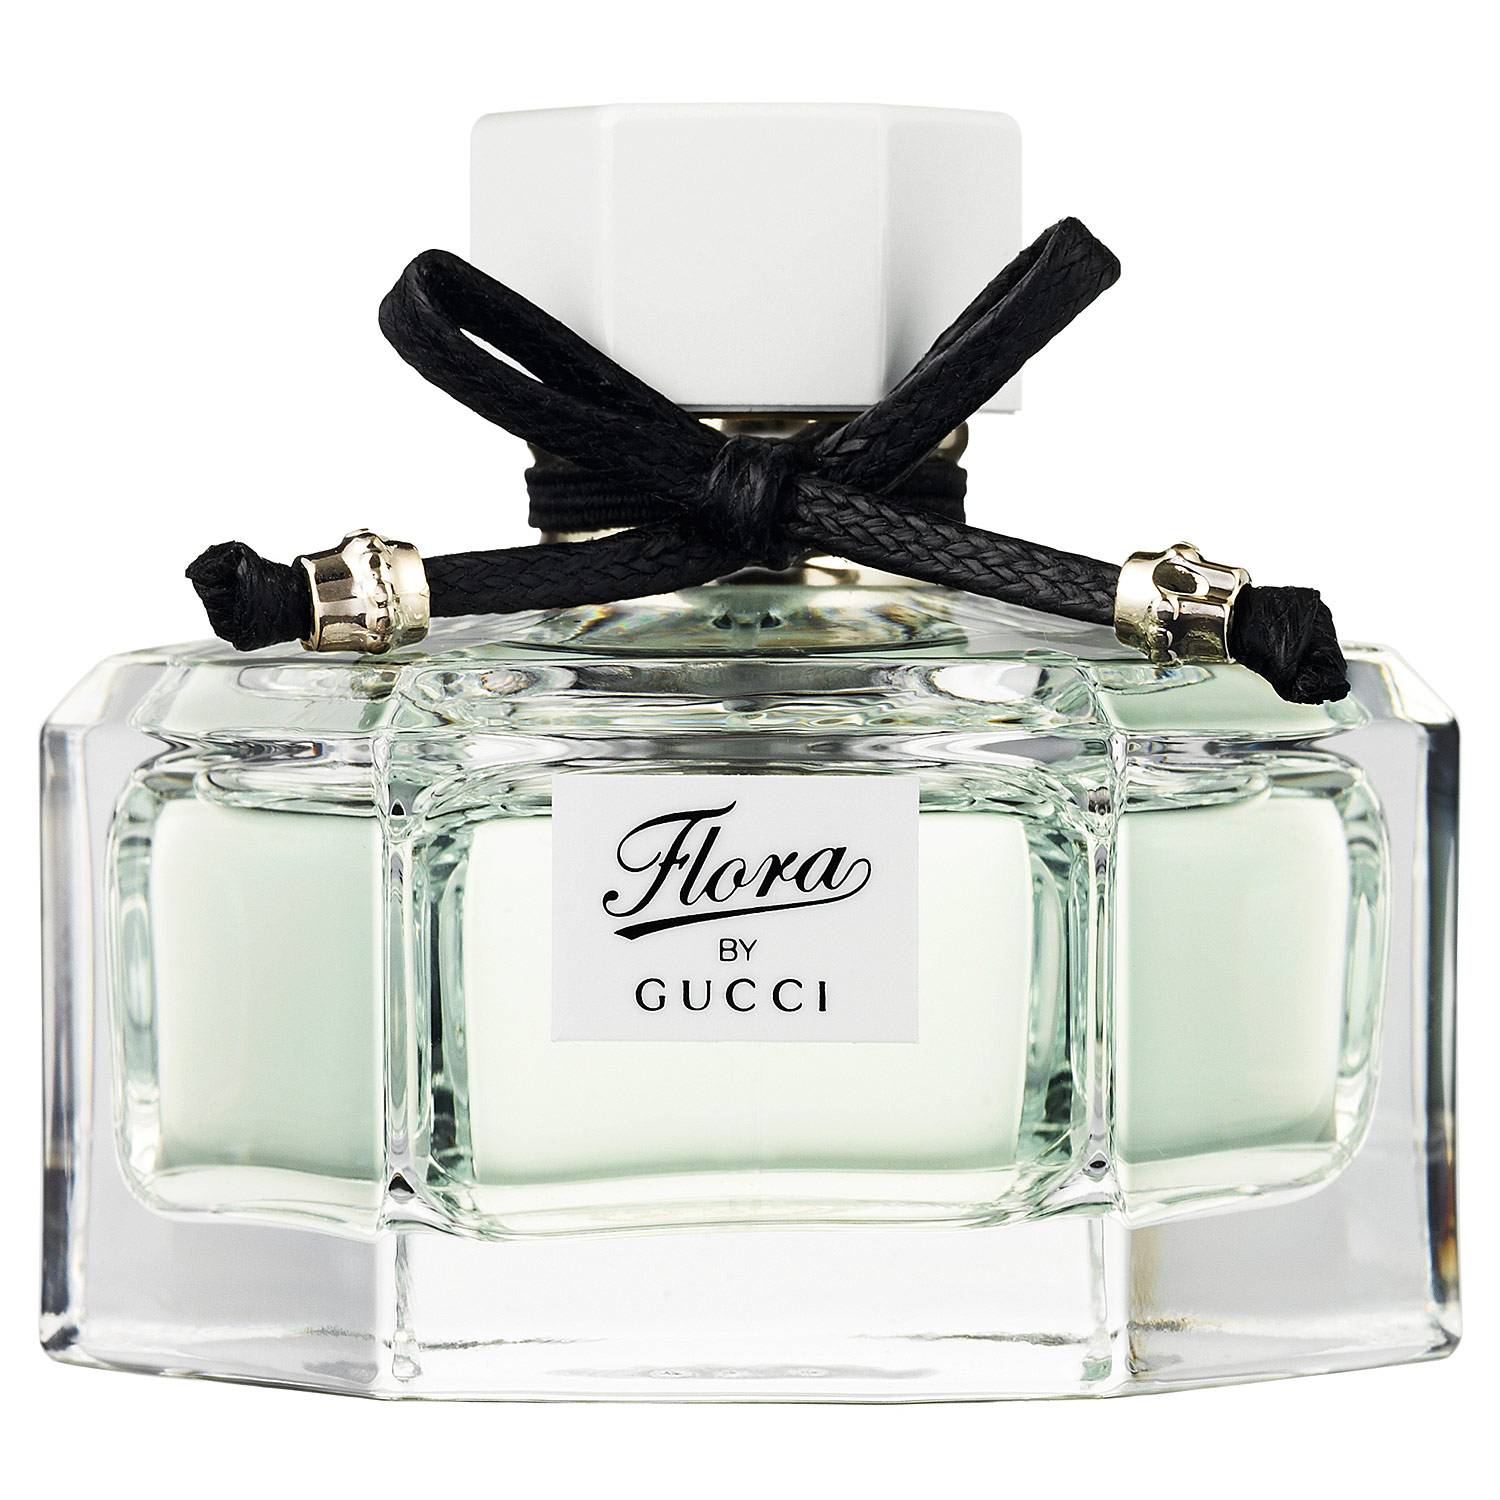 Sicilien Hejse Rejse Buy Gucci Flora Perfume | The Art of Mike Mignola